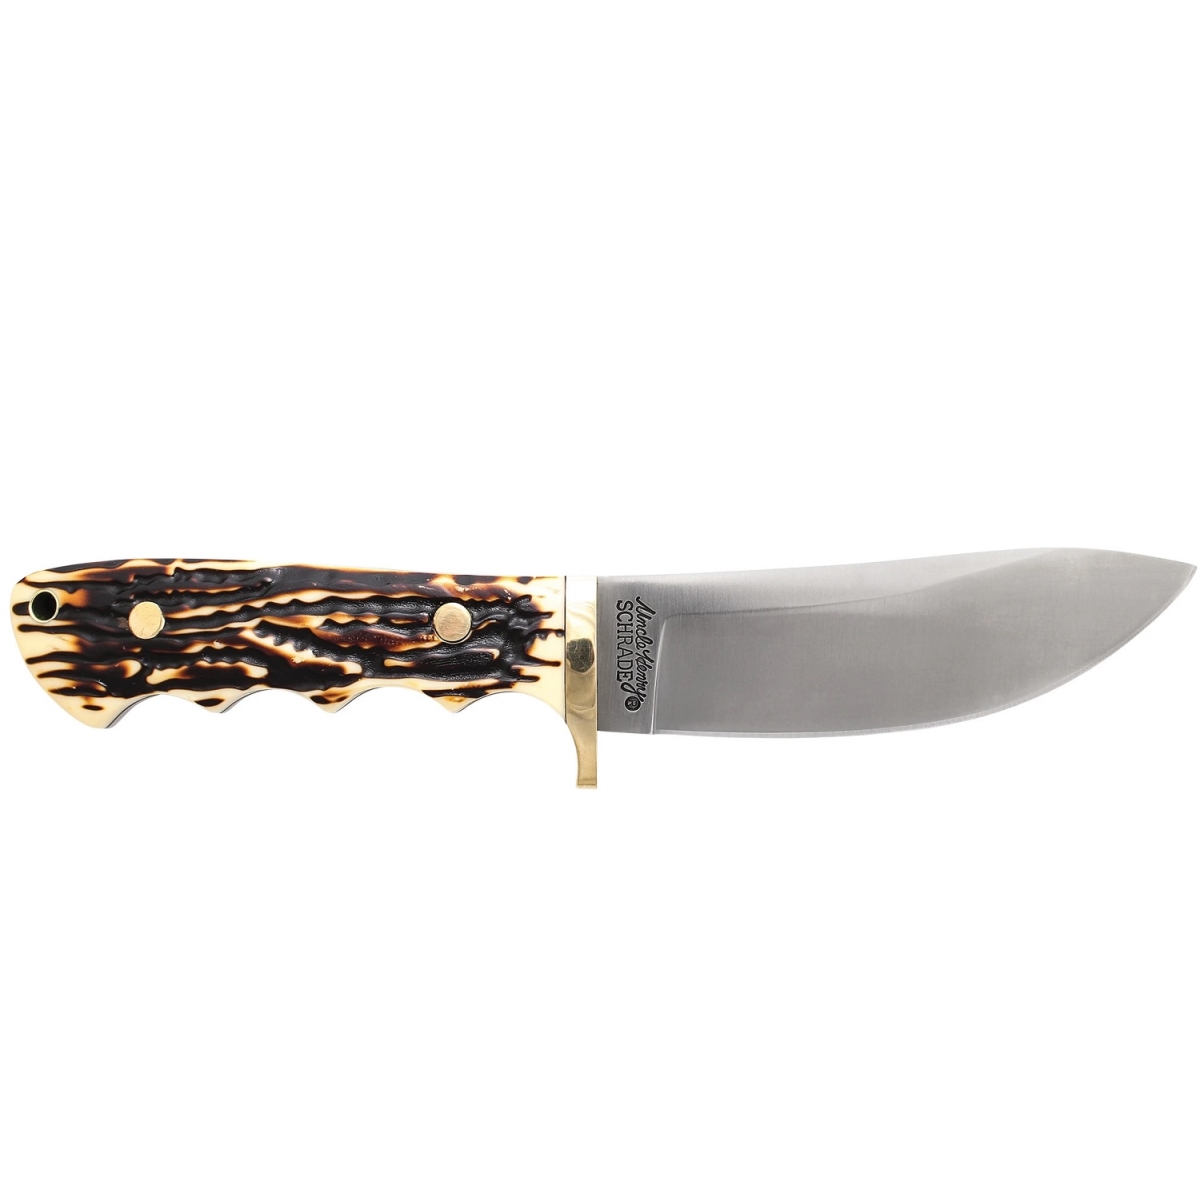 4020135 4.6 in. Next Gen Fixed Blade Staglon Handle Knife